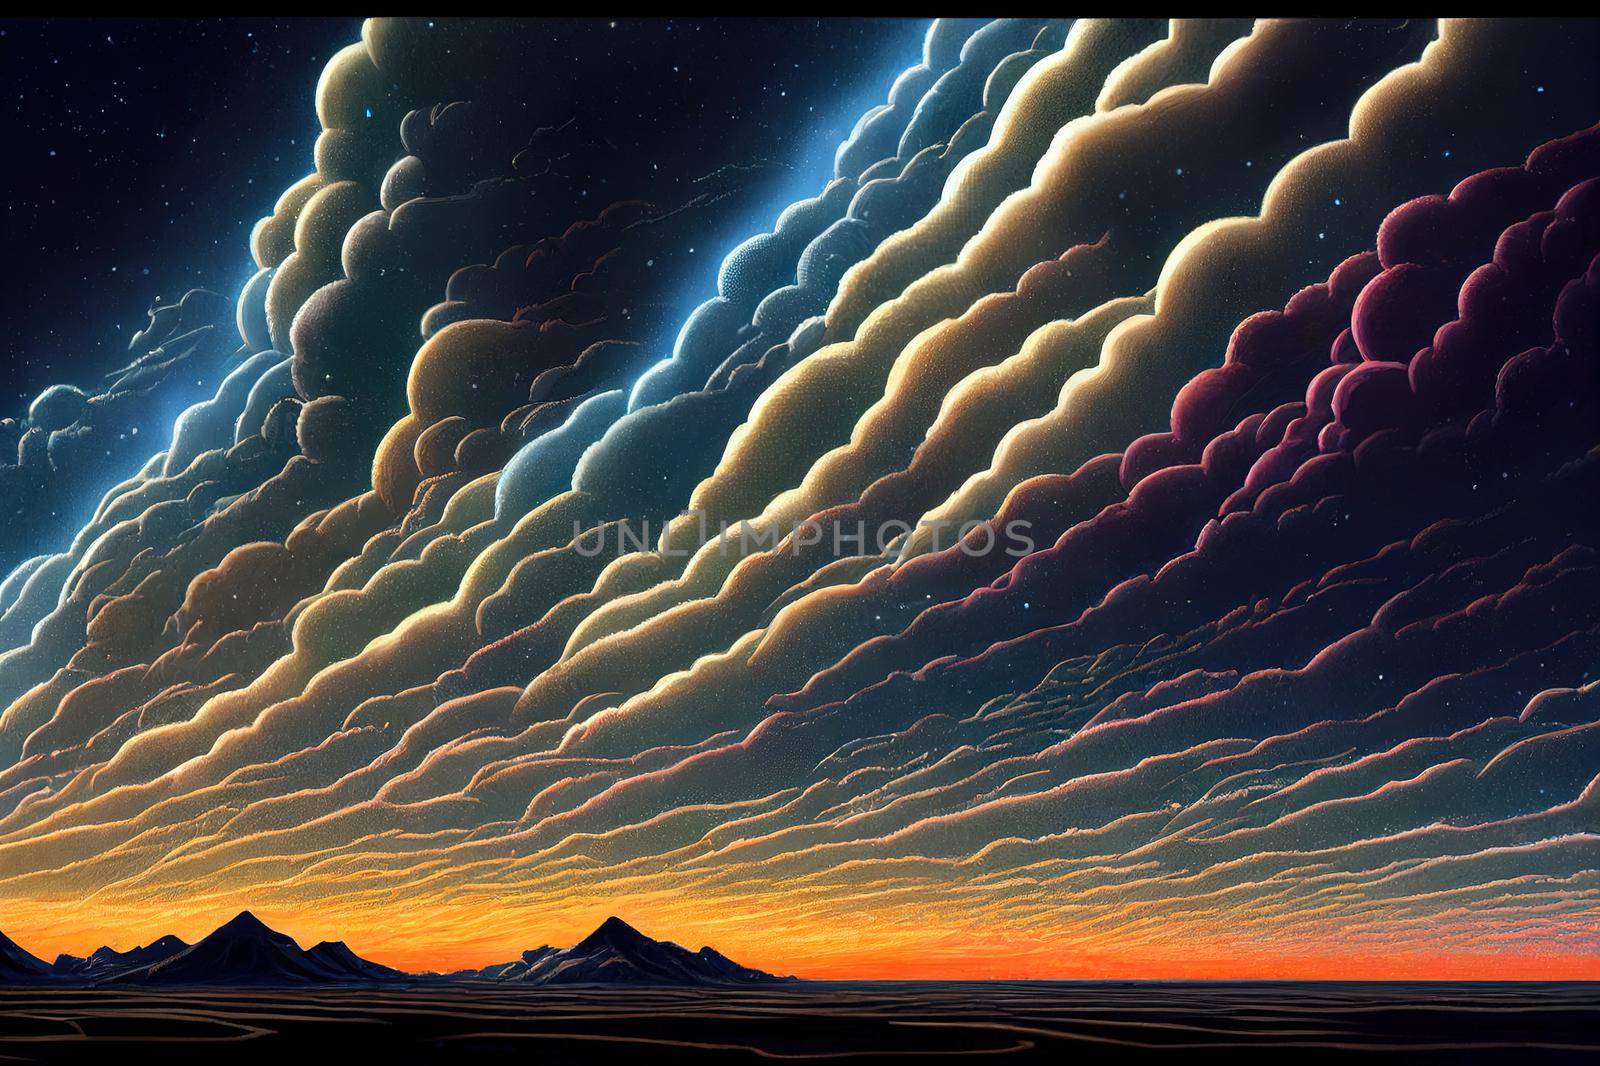 The divine sky. High quality illustration